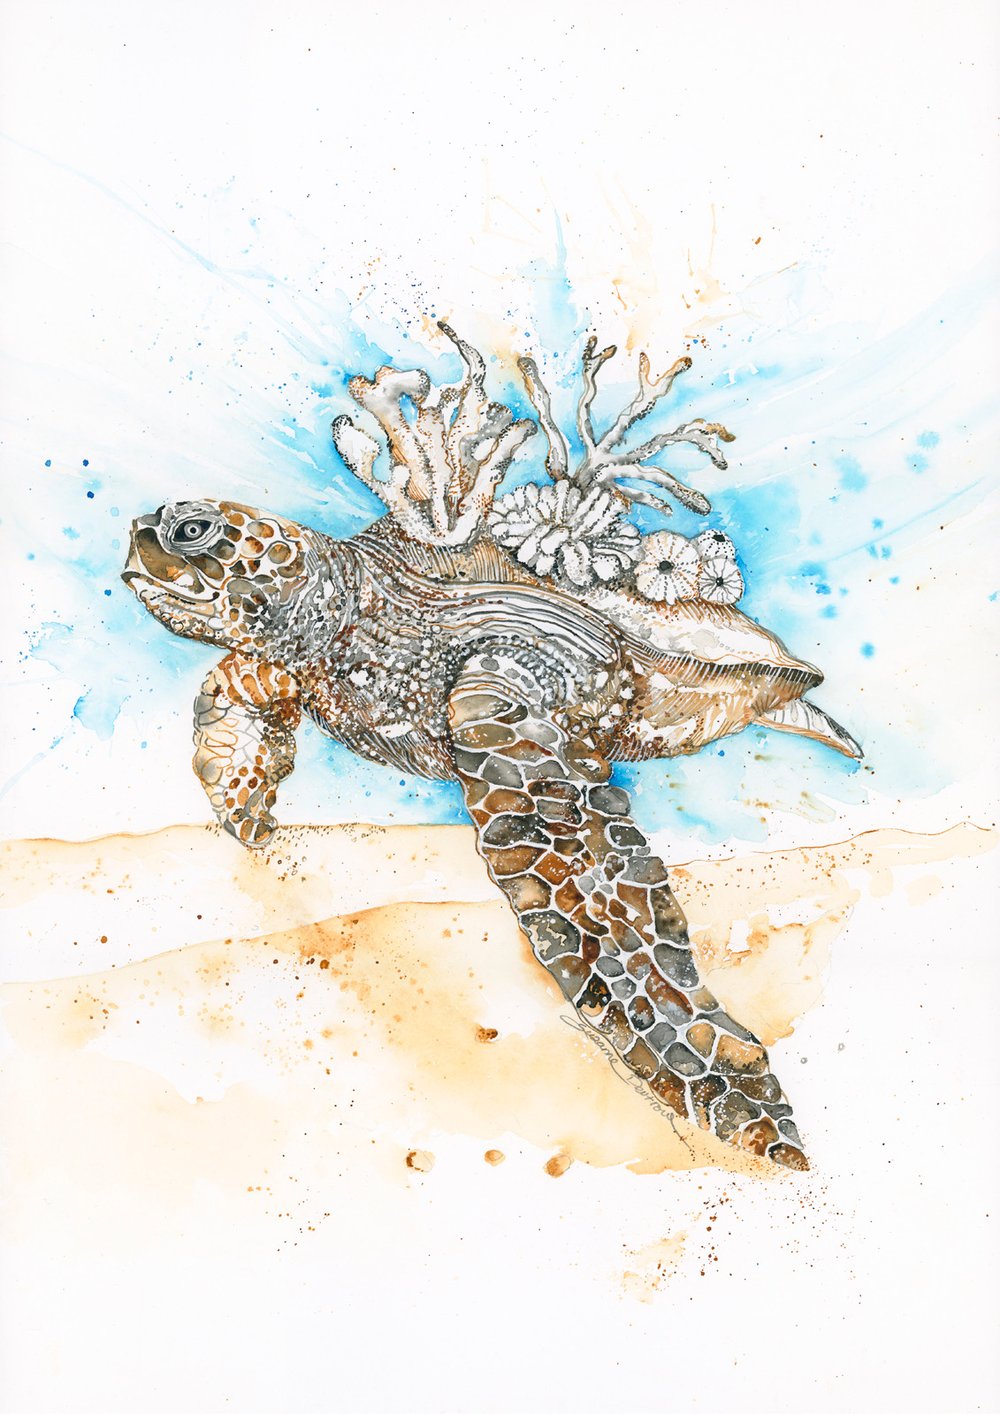 Image of Douglas the sea turtle